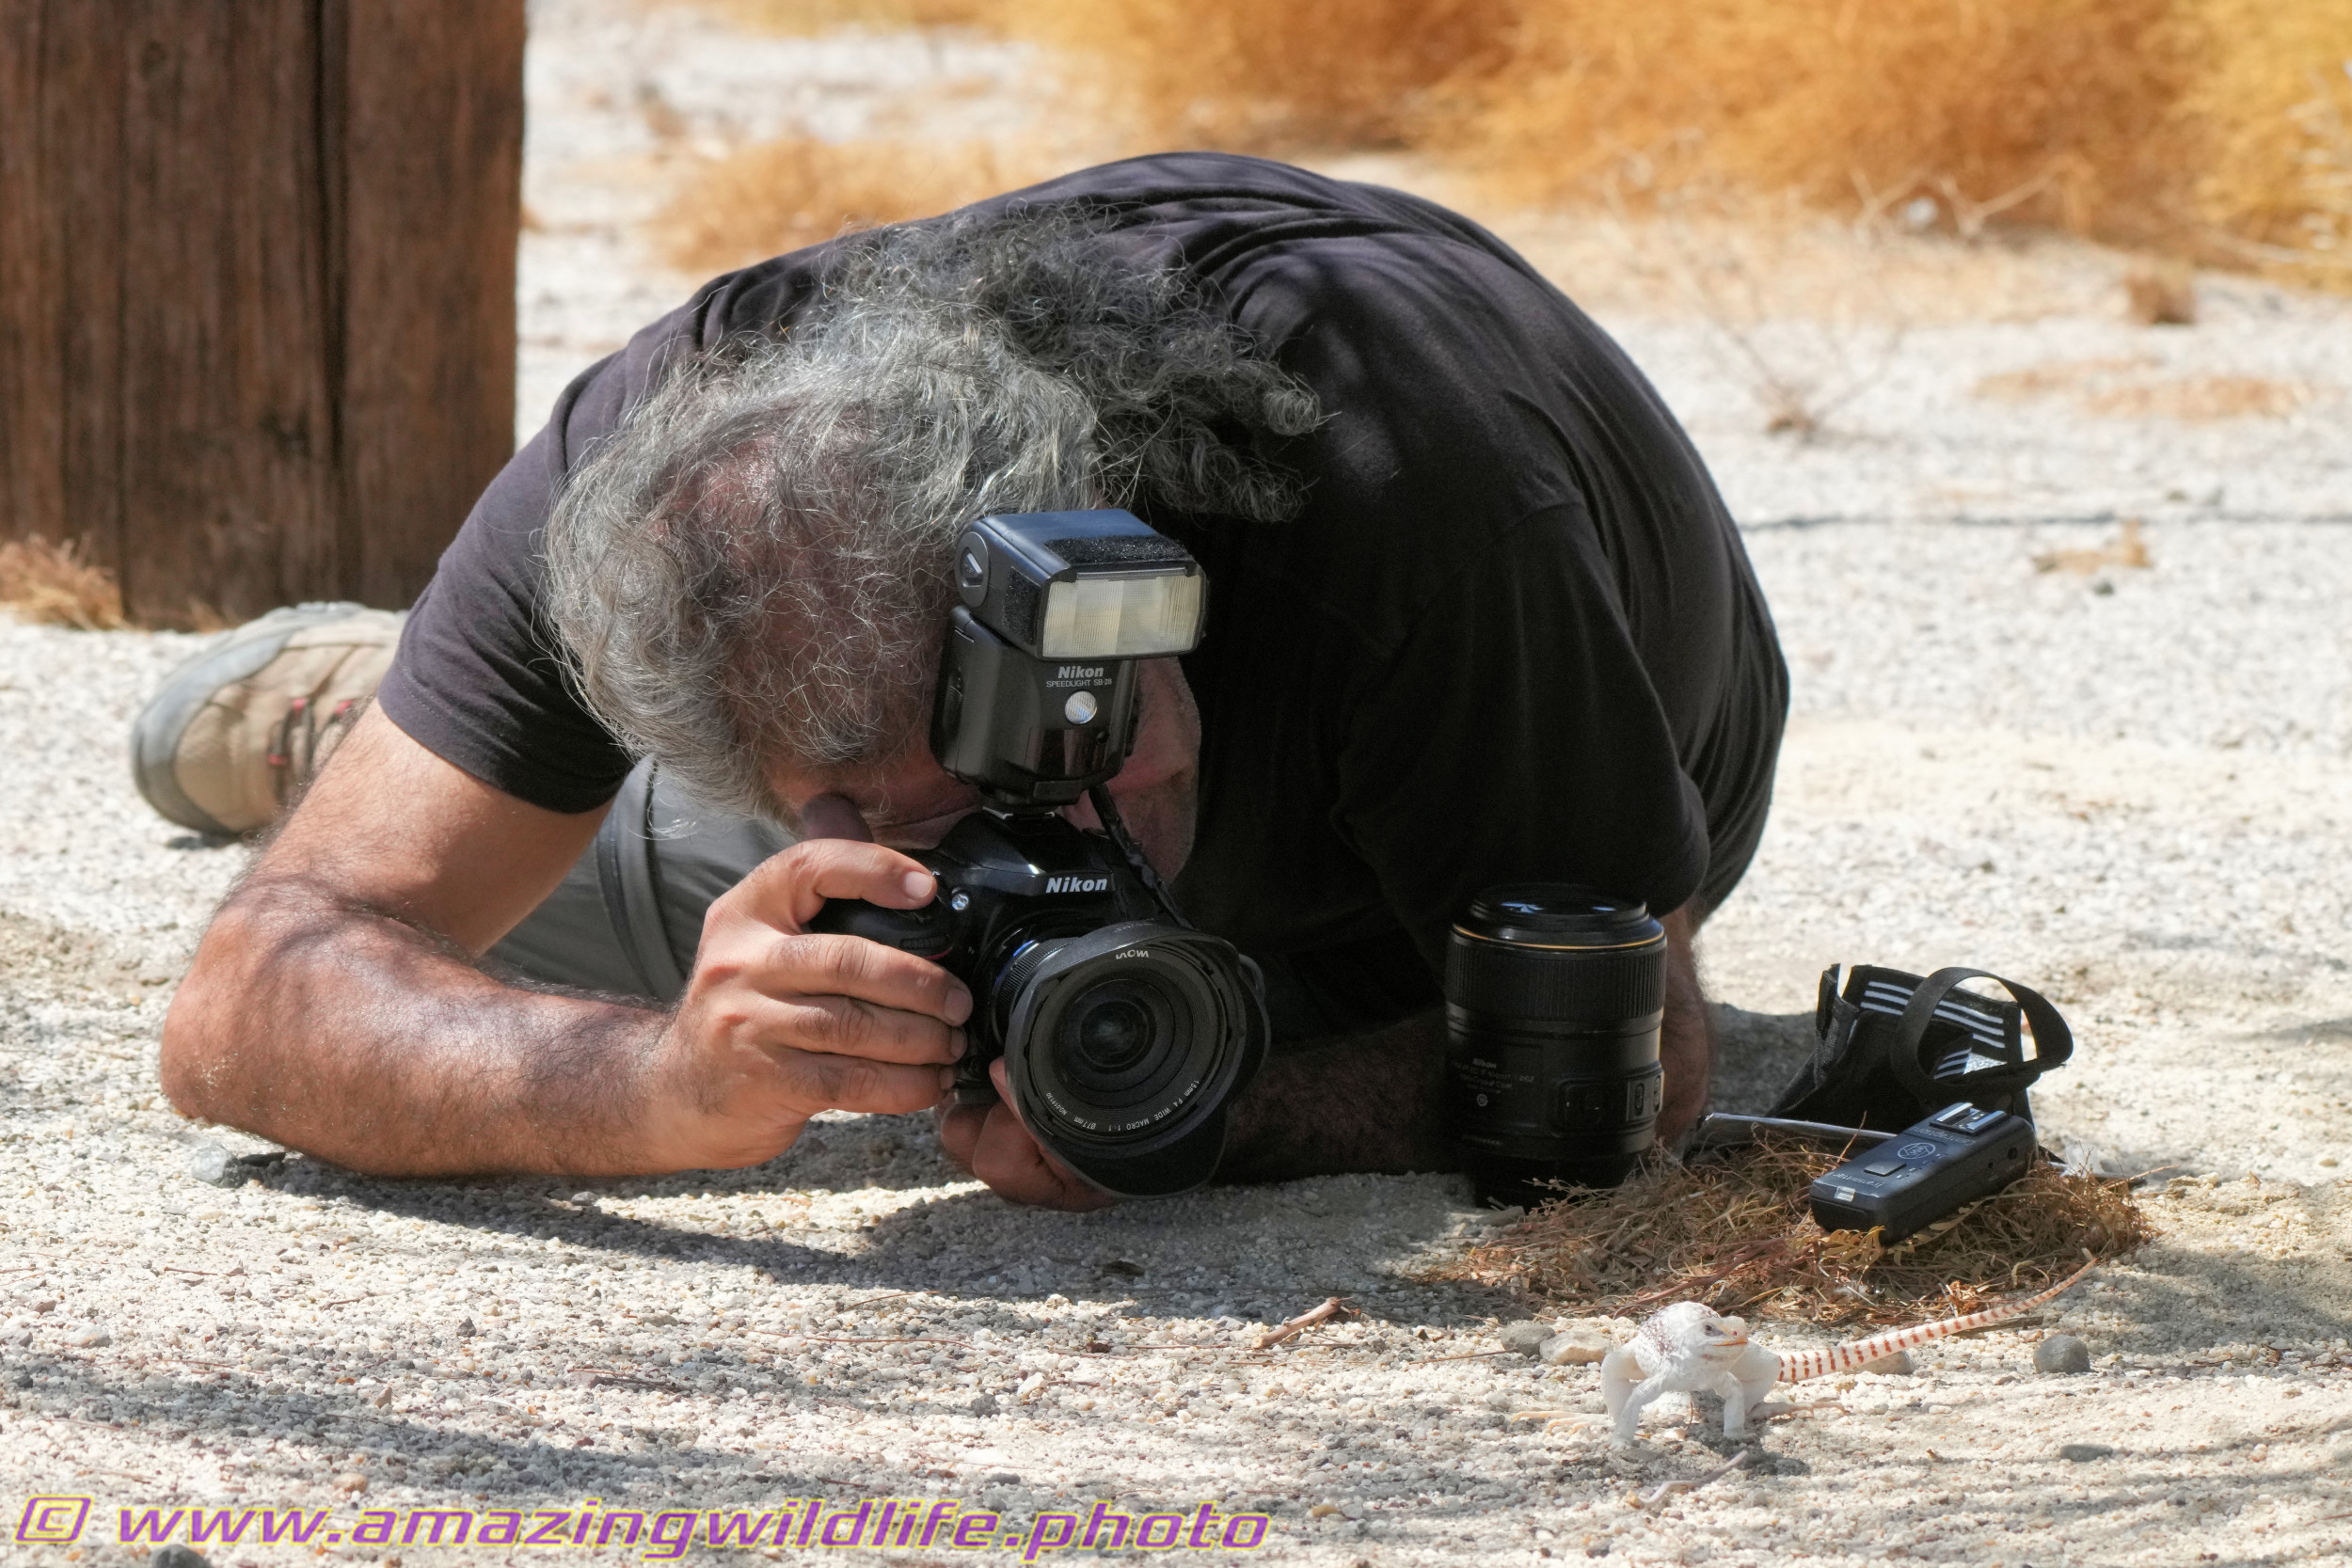 Desert trip with Rowshan – part 2 - Rowshan photographing a desert iguana